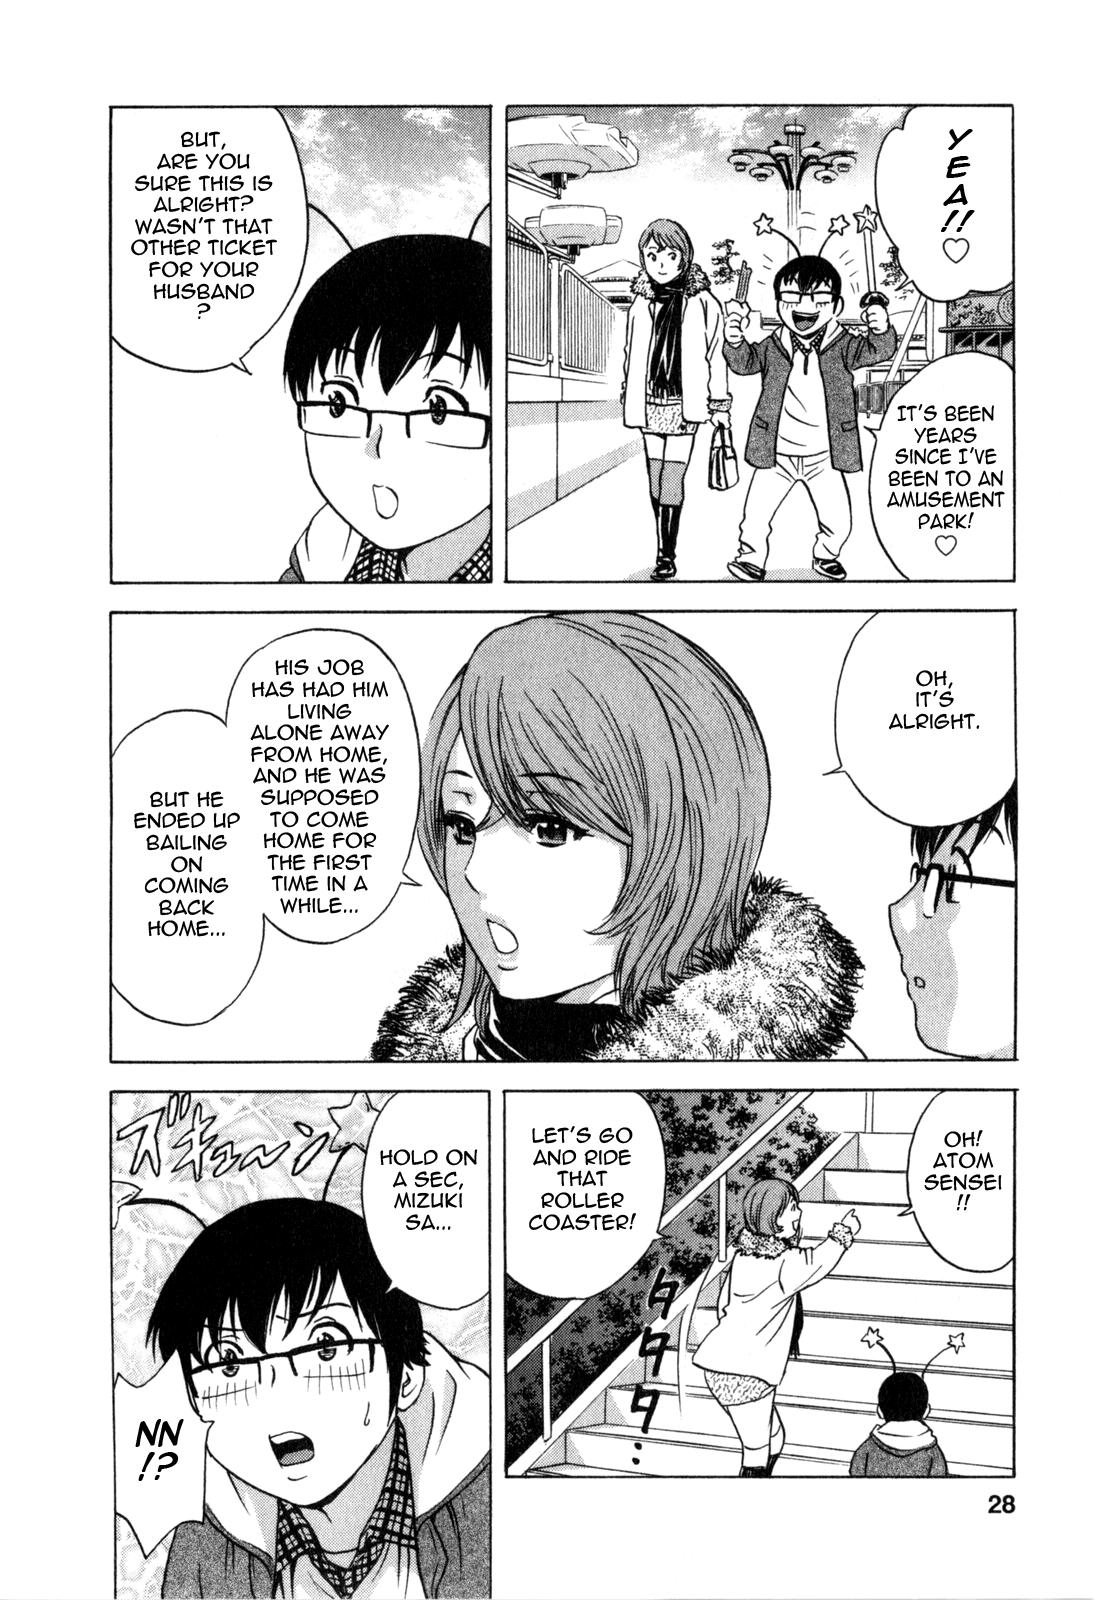 [Hidemaru] Life with Married Women Just Like a Manga 3 - Ch. 1-2 [English] {Tadanohito} 31